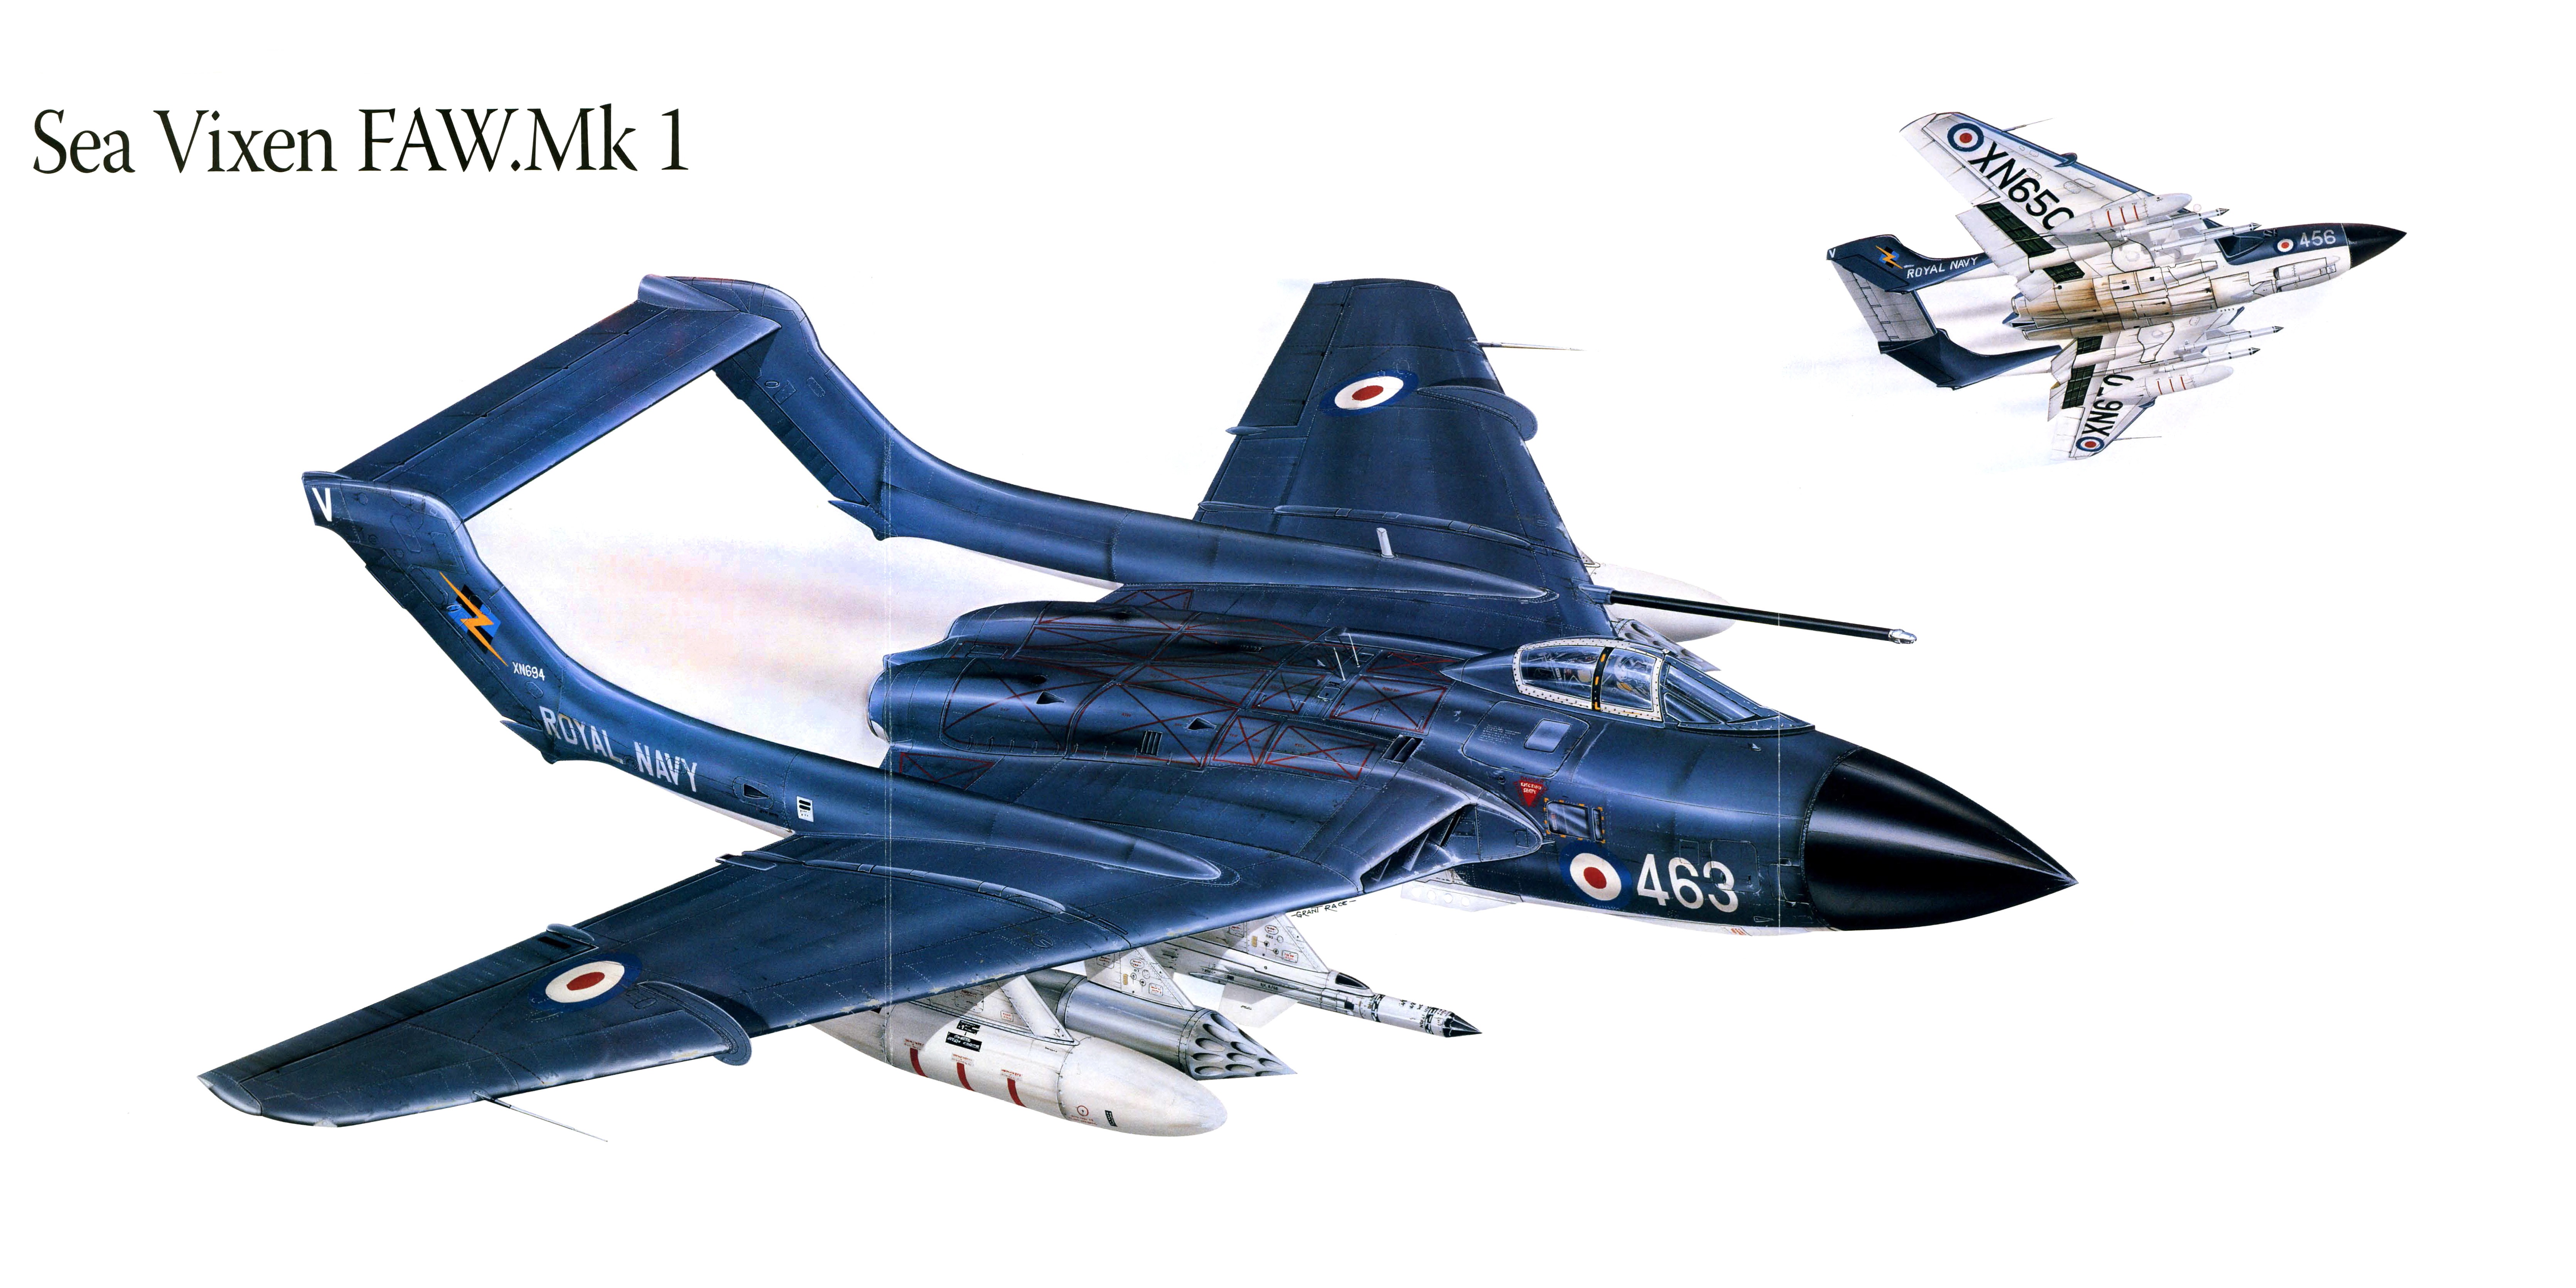 6680x3340、飛行機、描かれた壁紙、Sea Vixen FAW.Mk 1、、航空、